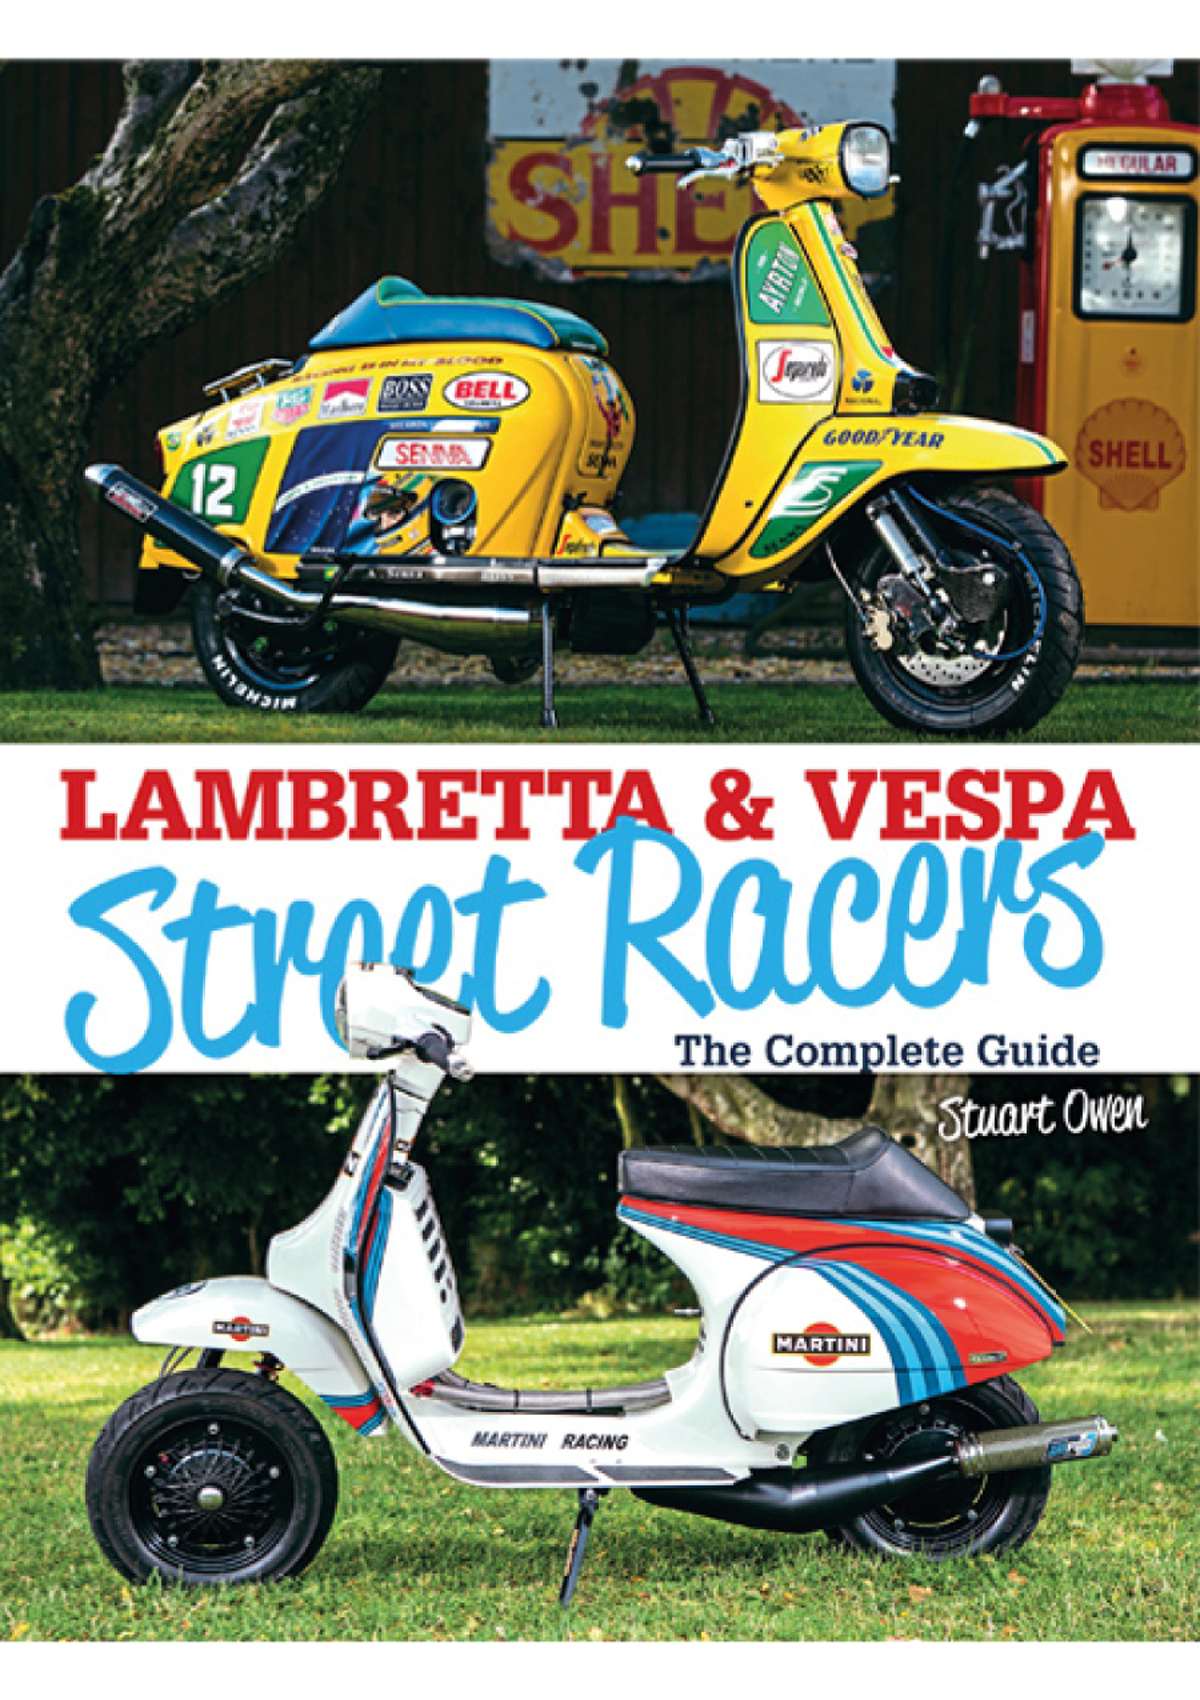 8603 - Lambretta & Vespa Street Racers